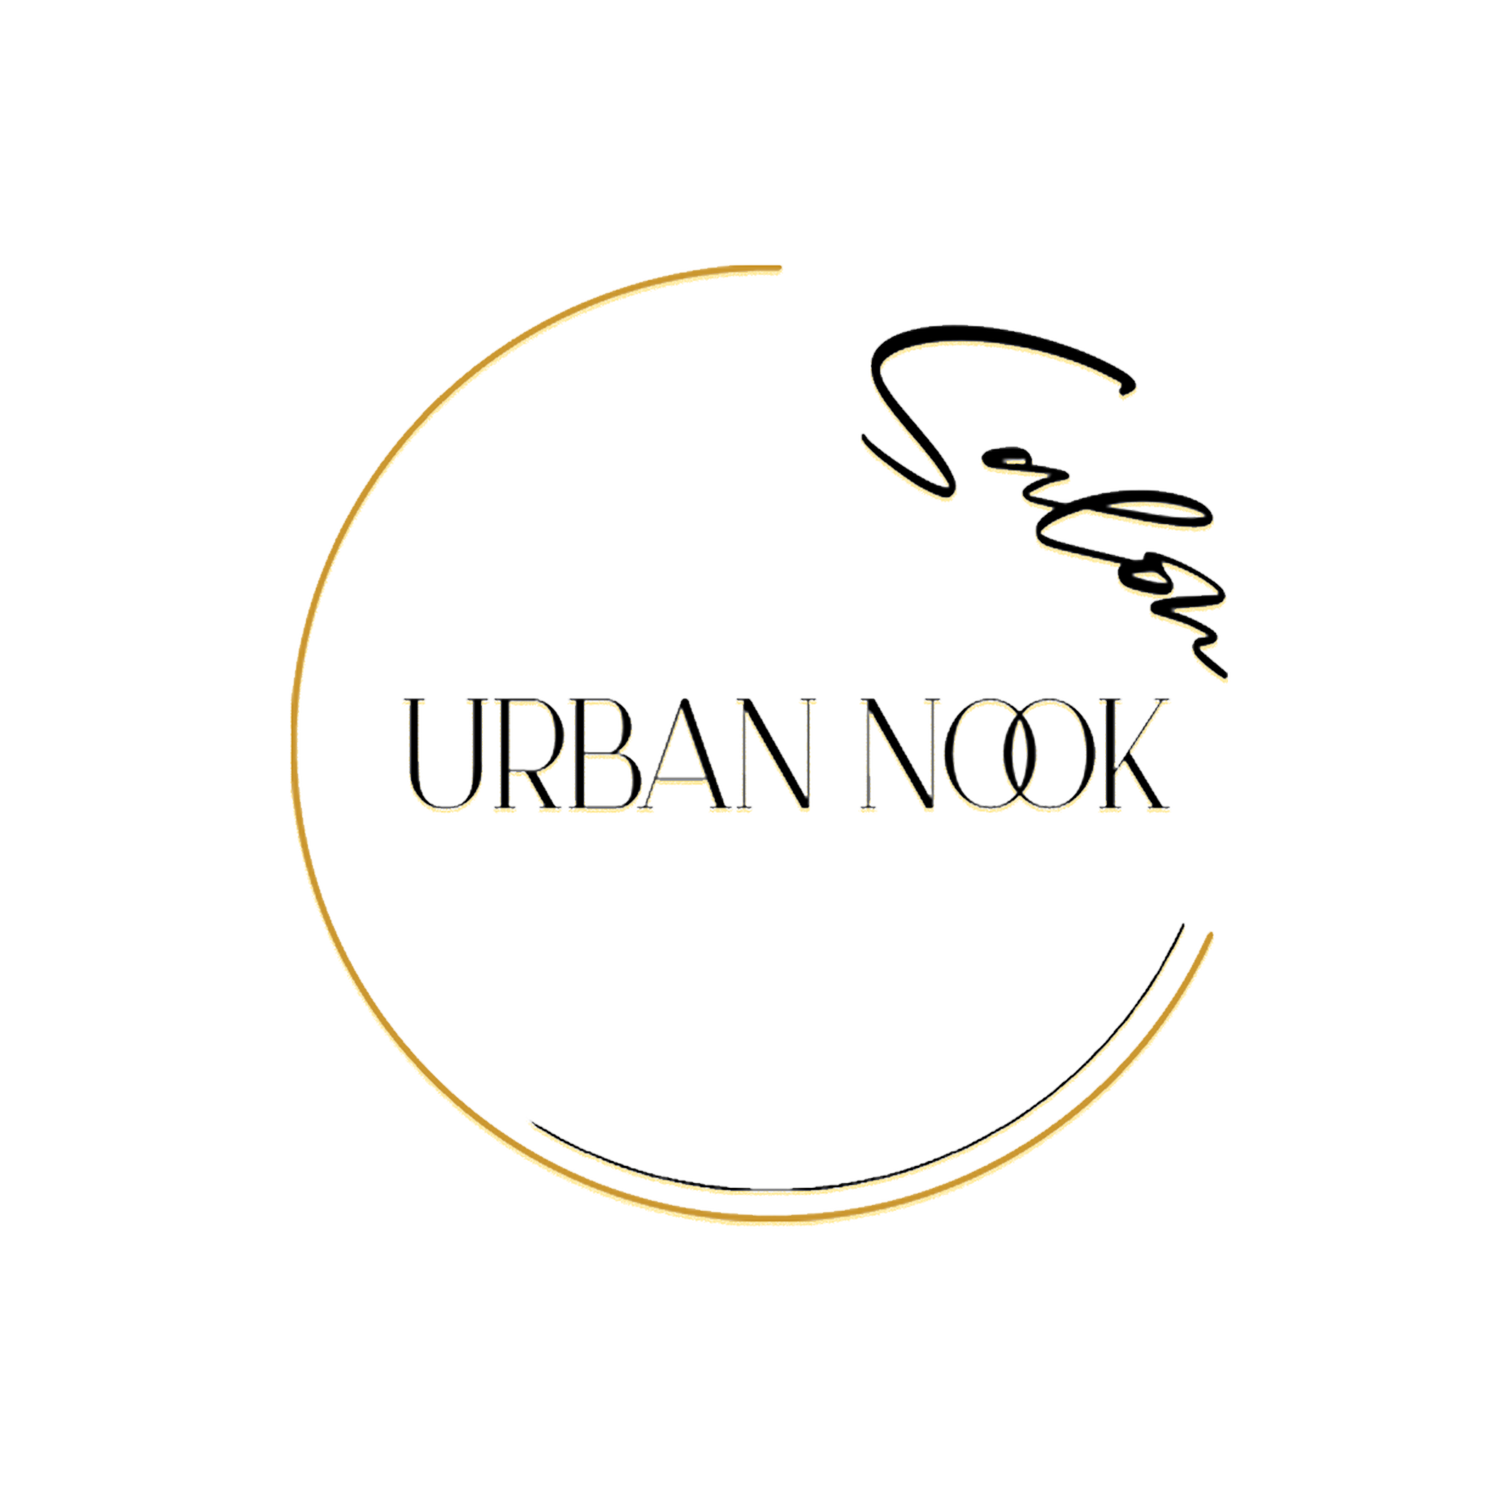 The Urban Nook